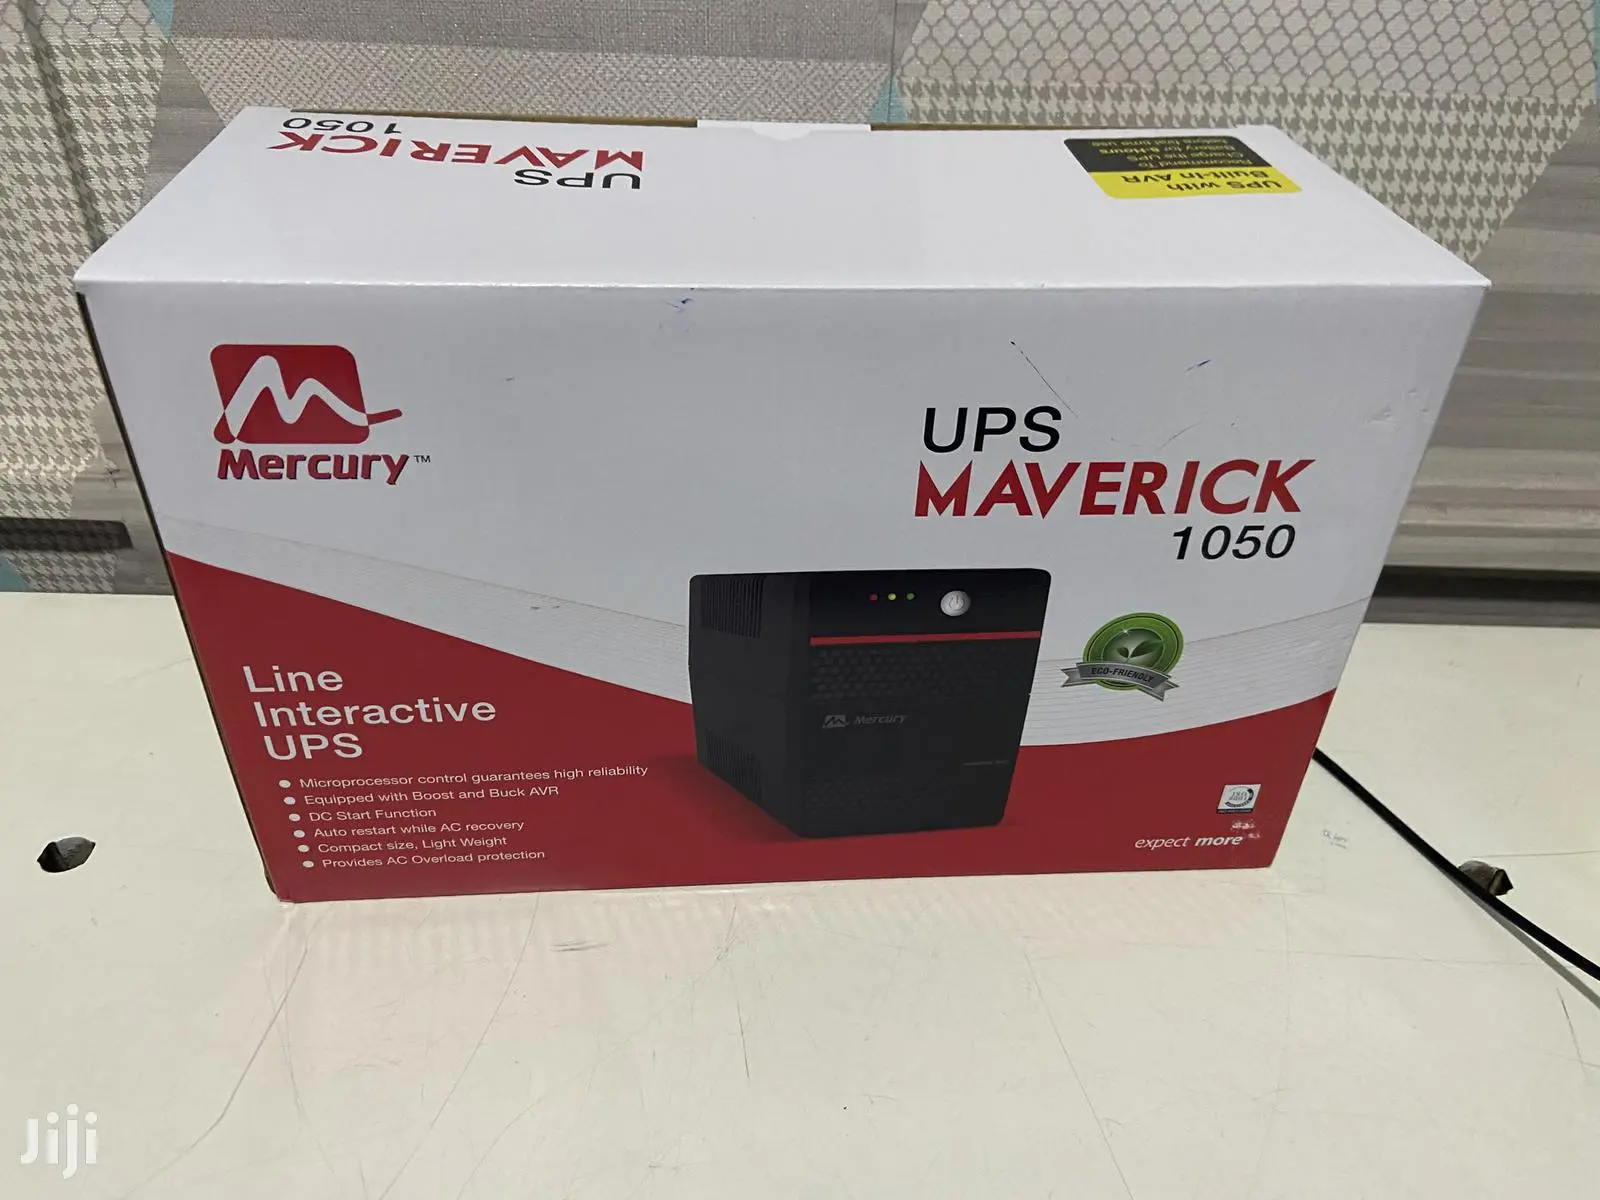 Mercury Maverick 1050VA UPS for sale in nairobi kenya